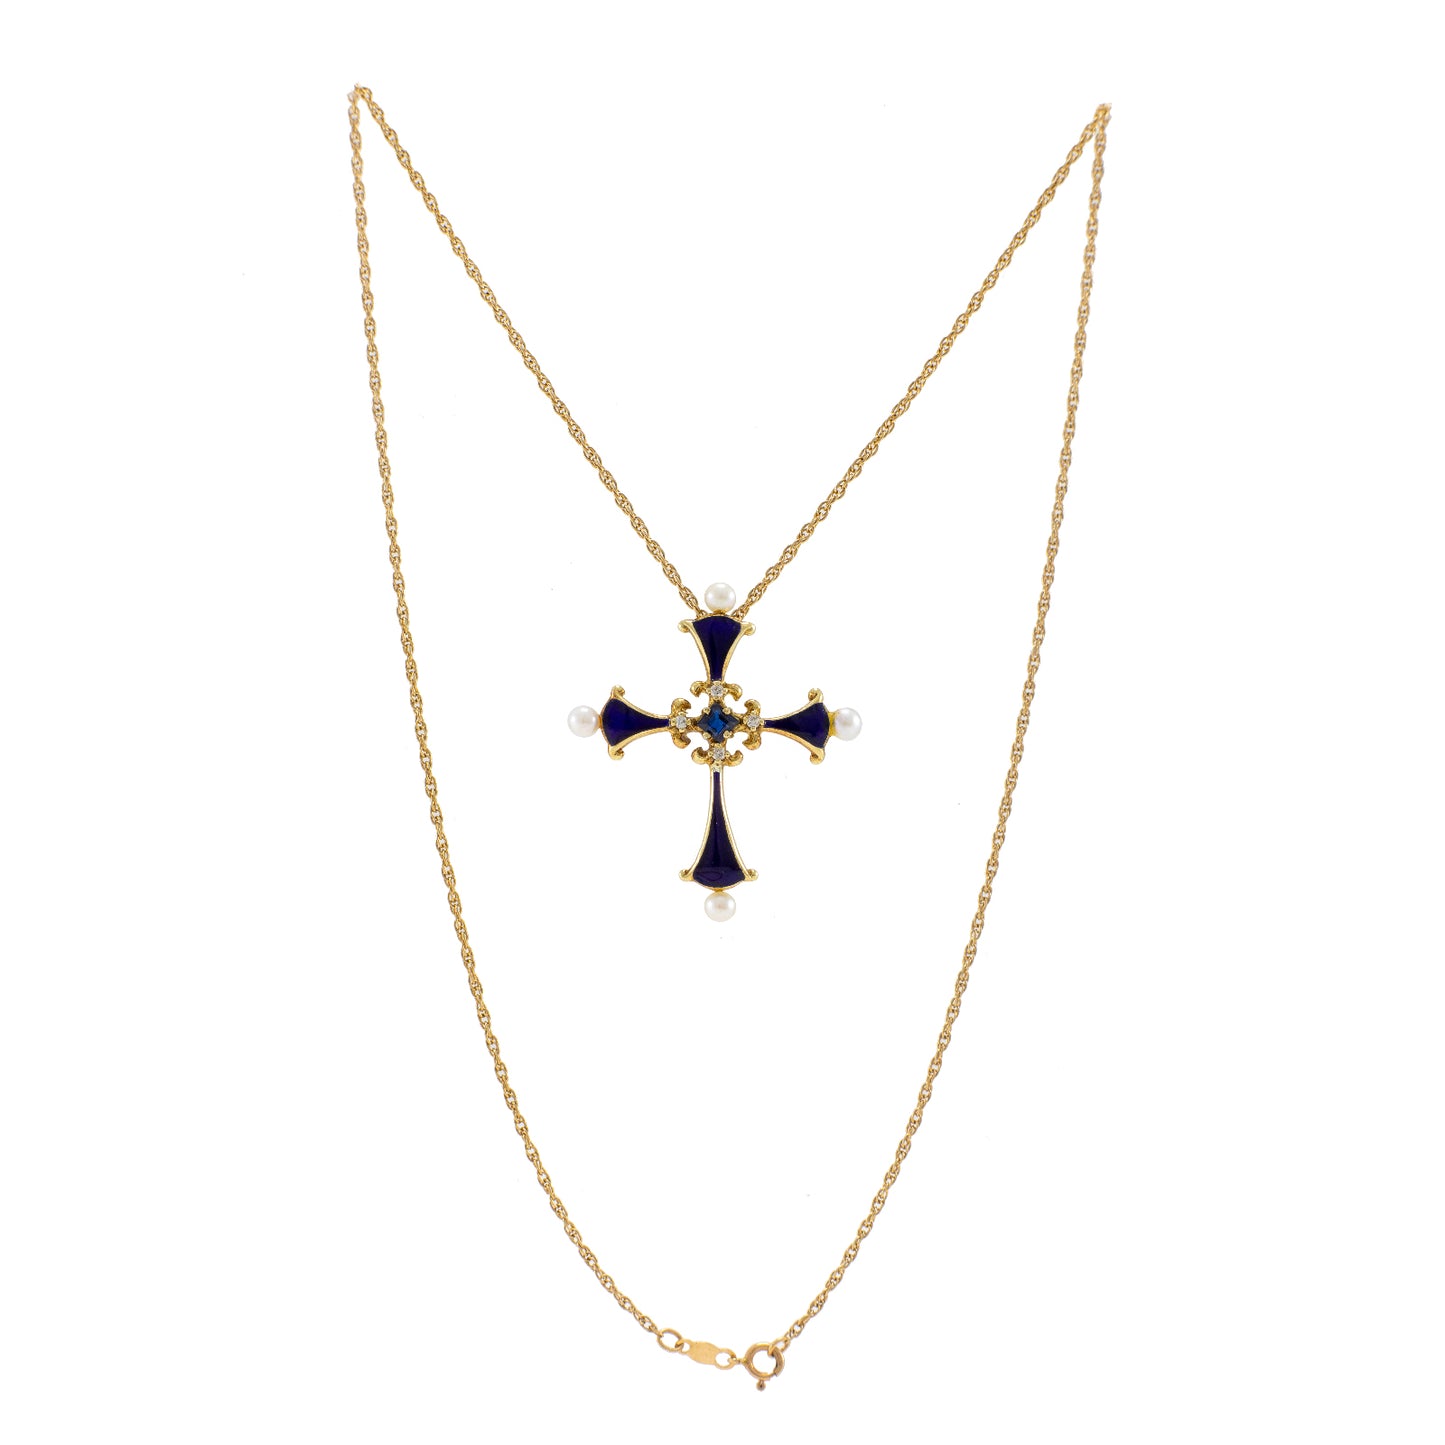 Art Deco necklace pendant cross diamond pearl enamel sapphire yellow gold 585 women's jewelry